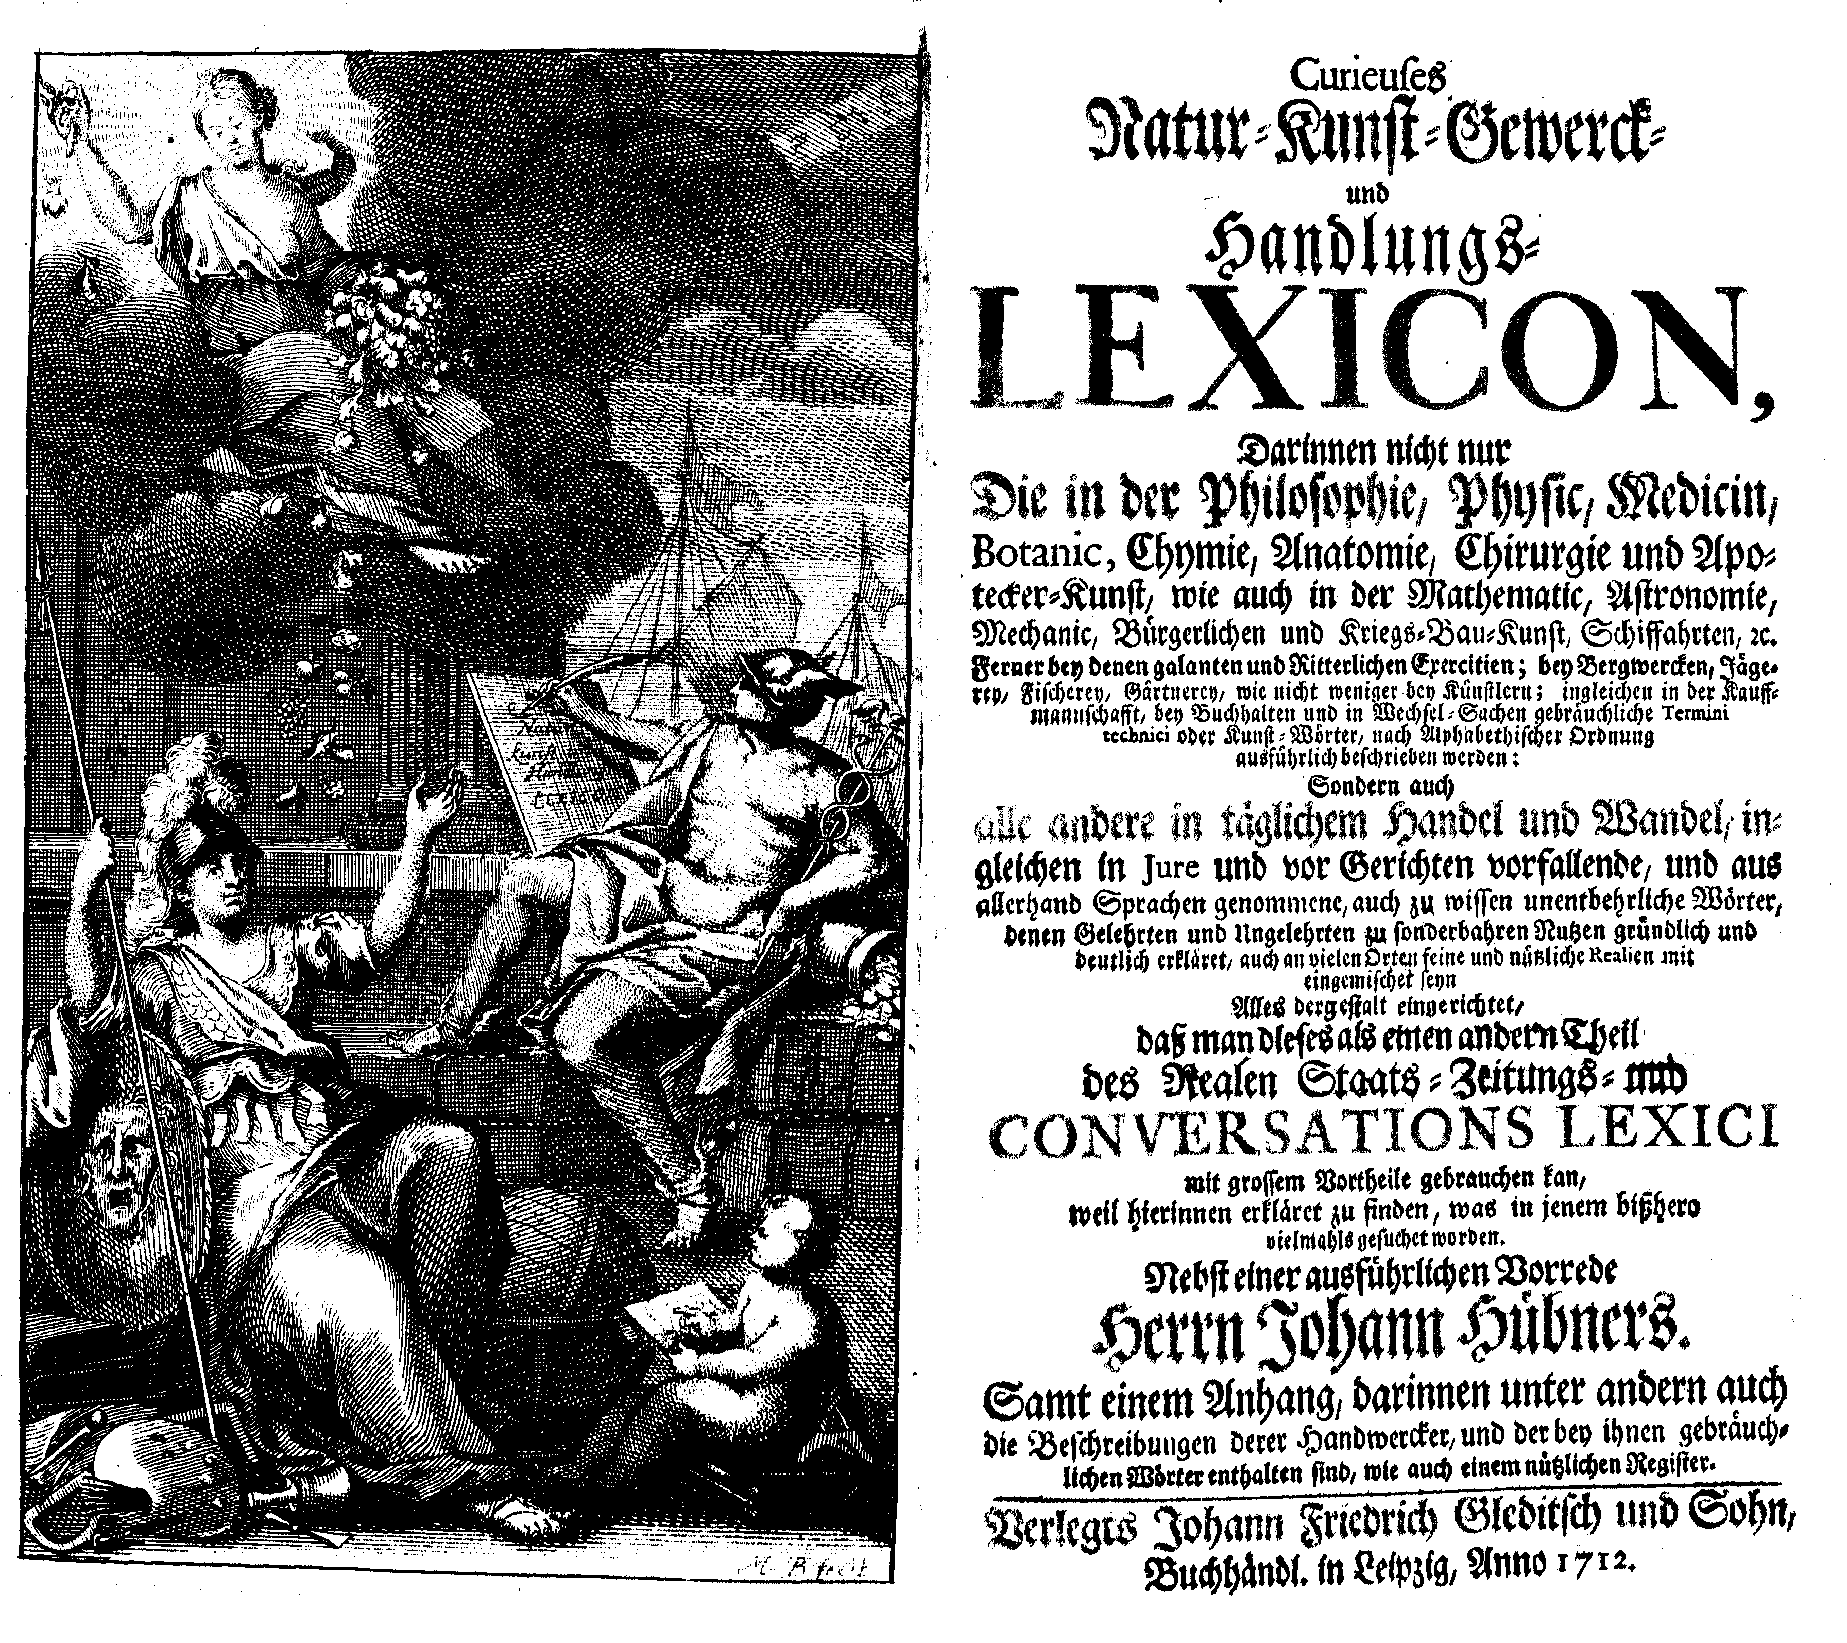 Johann Jacob Marperger et al., Curieuses Natur-Kunst-Gewerck- und Handlungs-Lexicon (Leipzig: J. Fr. Gleditsch & Sohn, 1712)